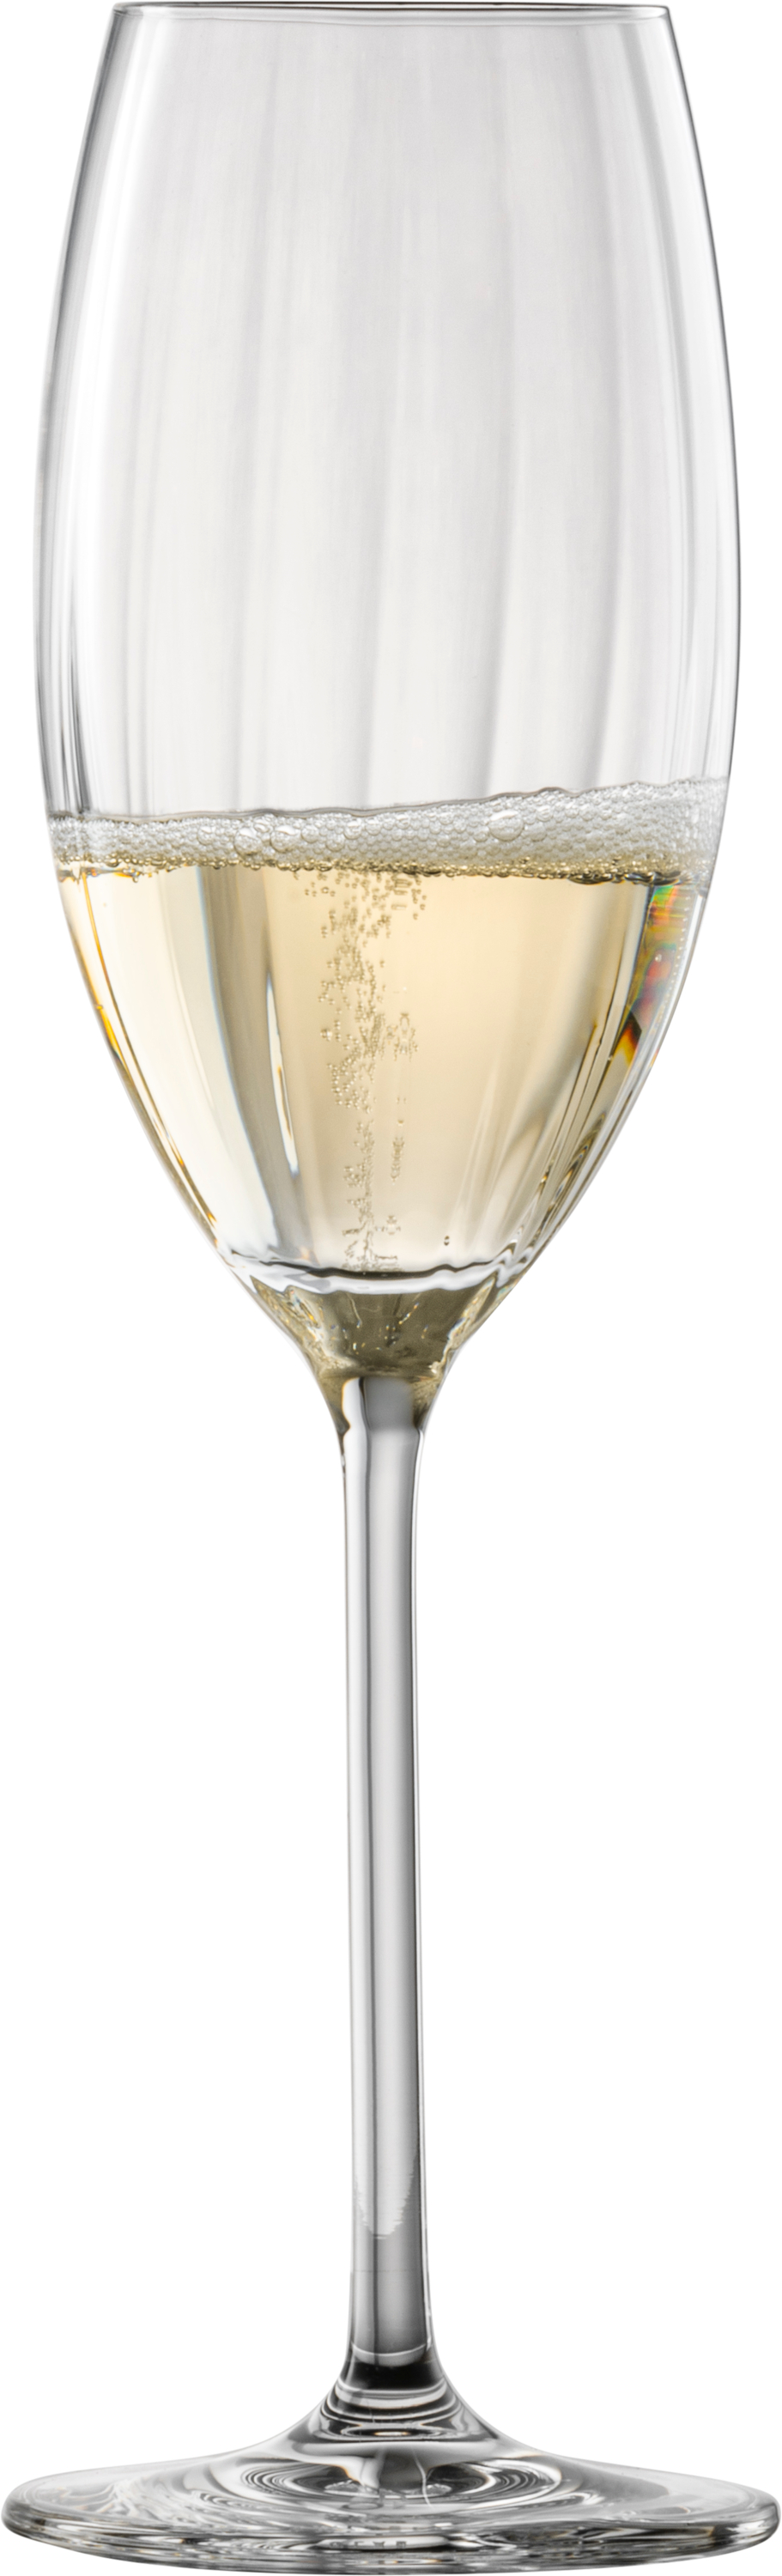 Prizma Champagner Glas 288ml spülmaschinenfest, Tritan Protect, Tritan 